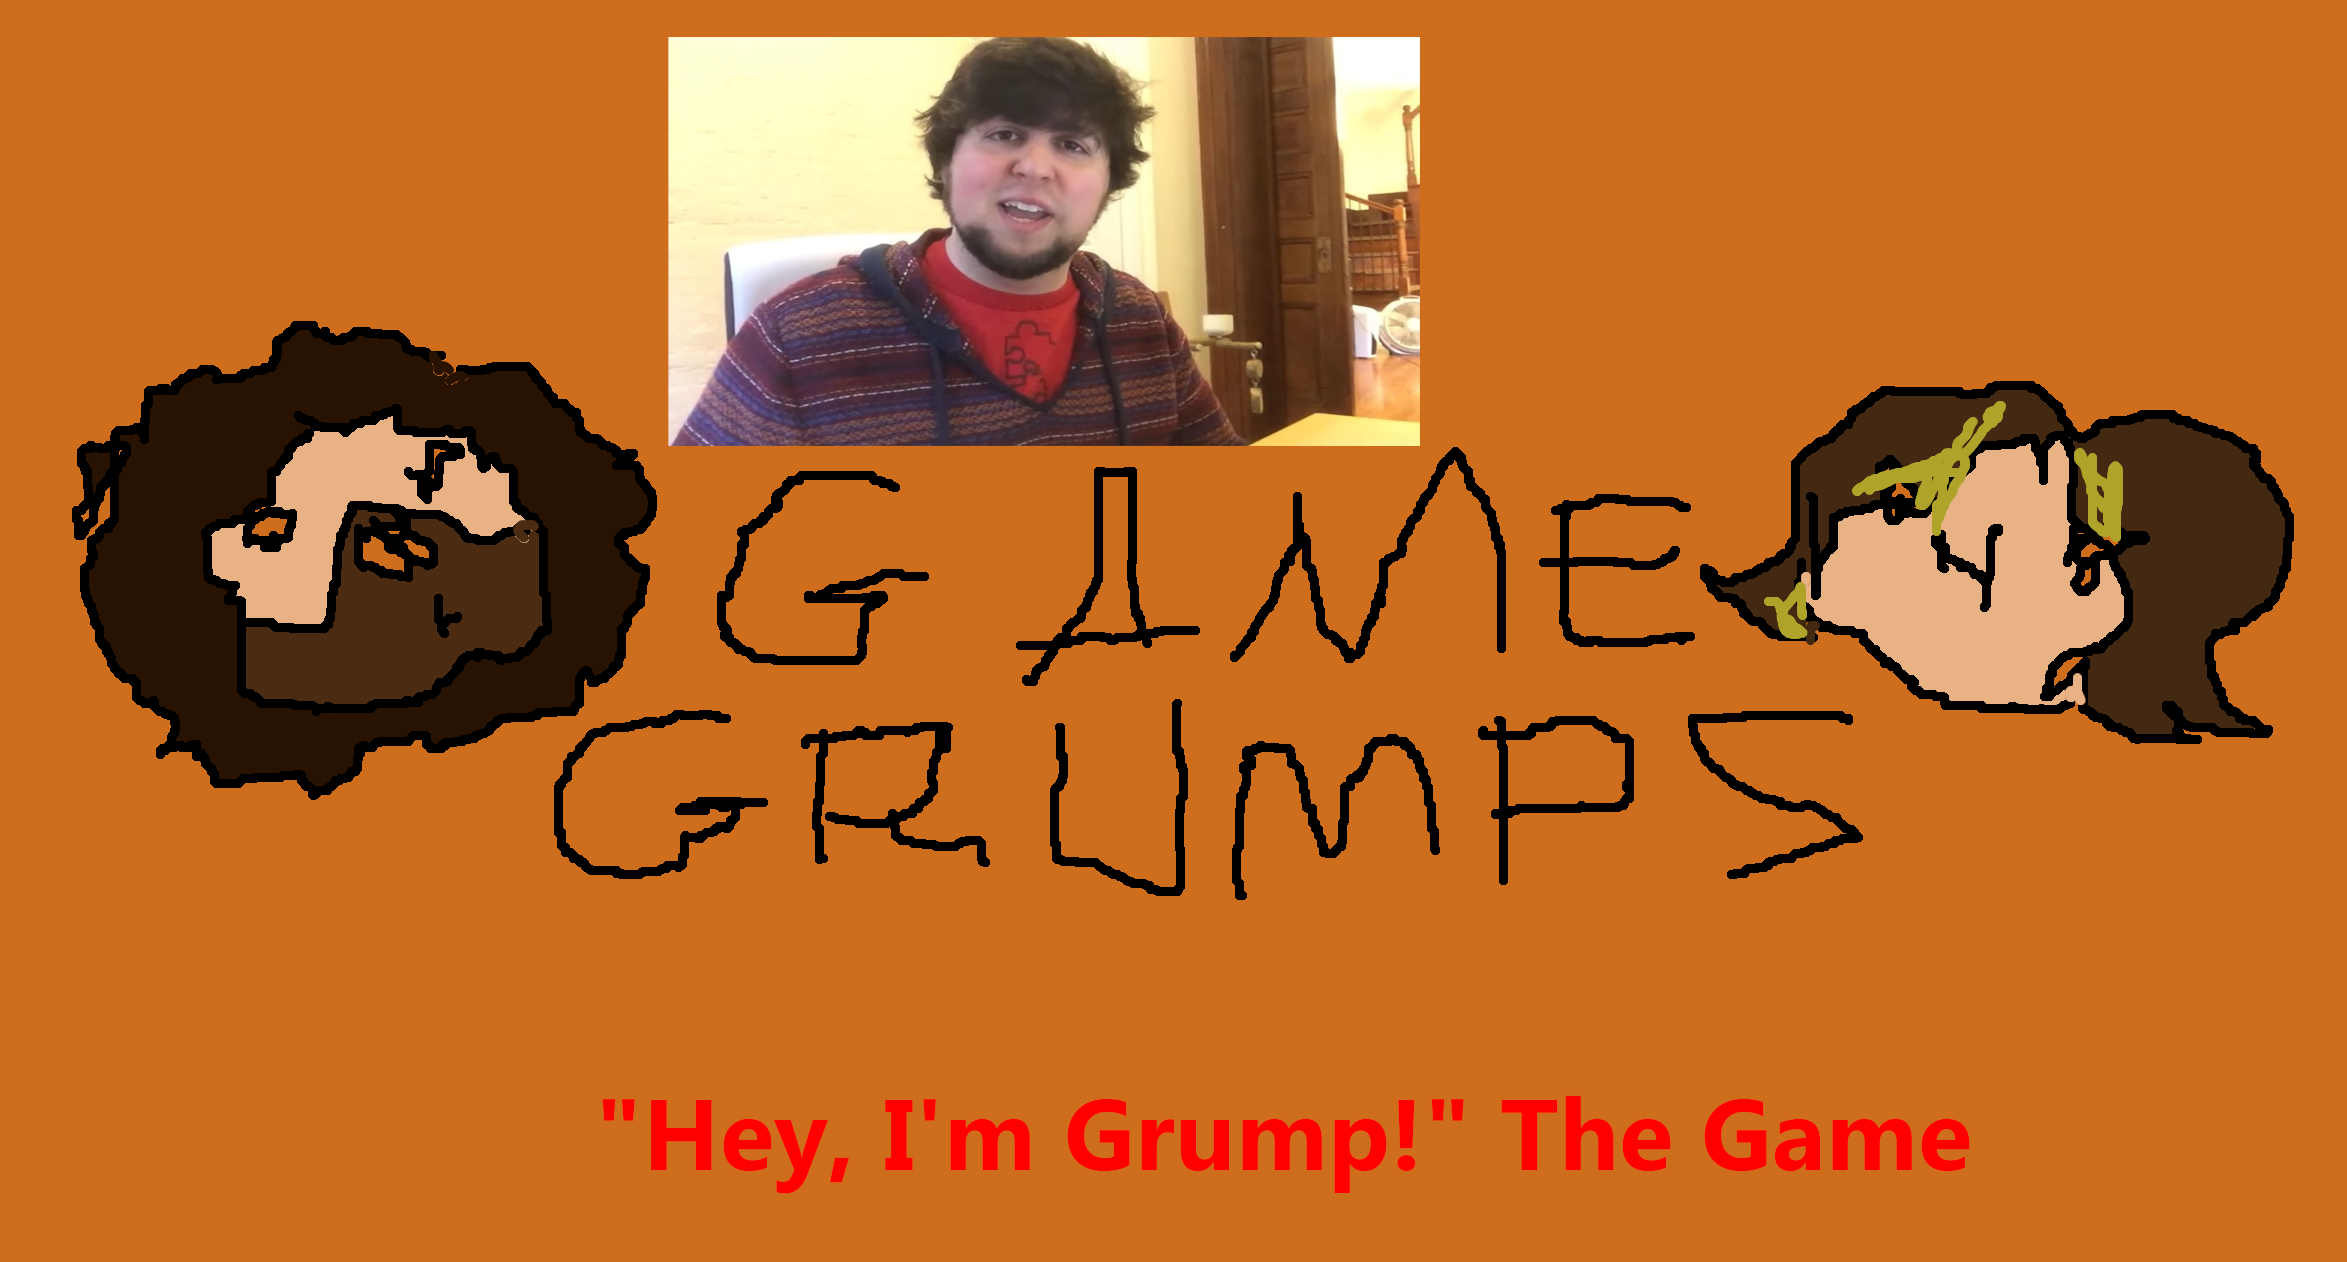 "Hey, I'm Grump!" The Game